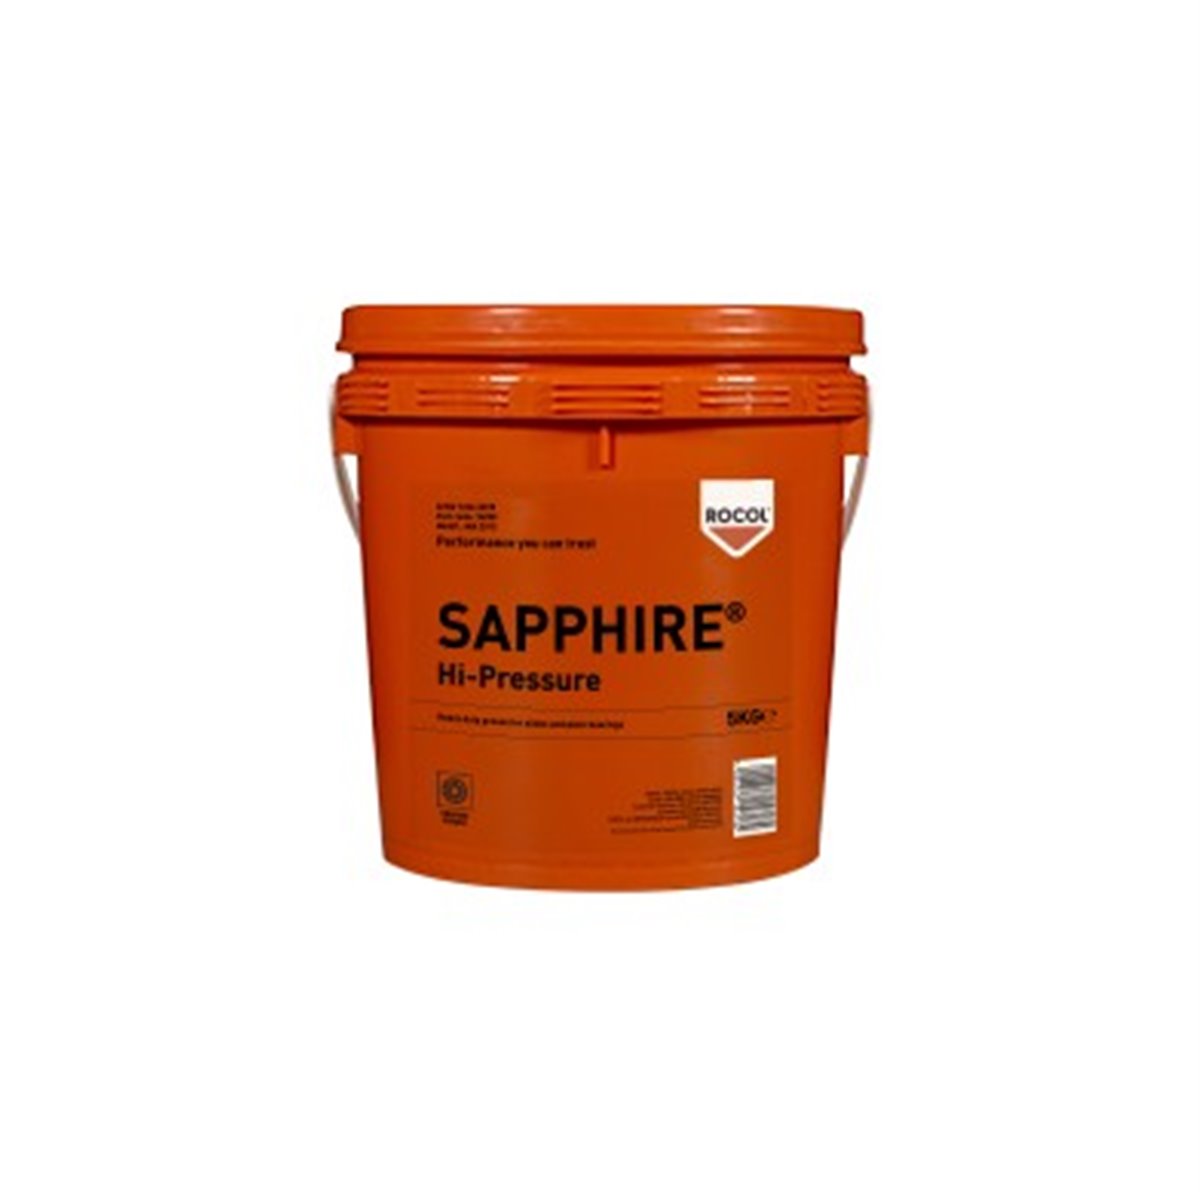 SAPPHIRE Hi-Pressure Rocol 5kg RS12016